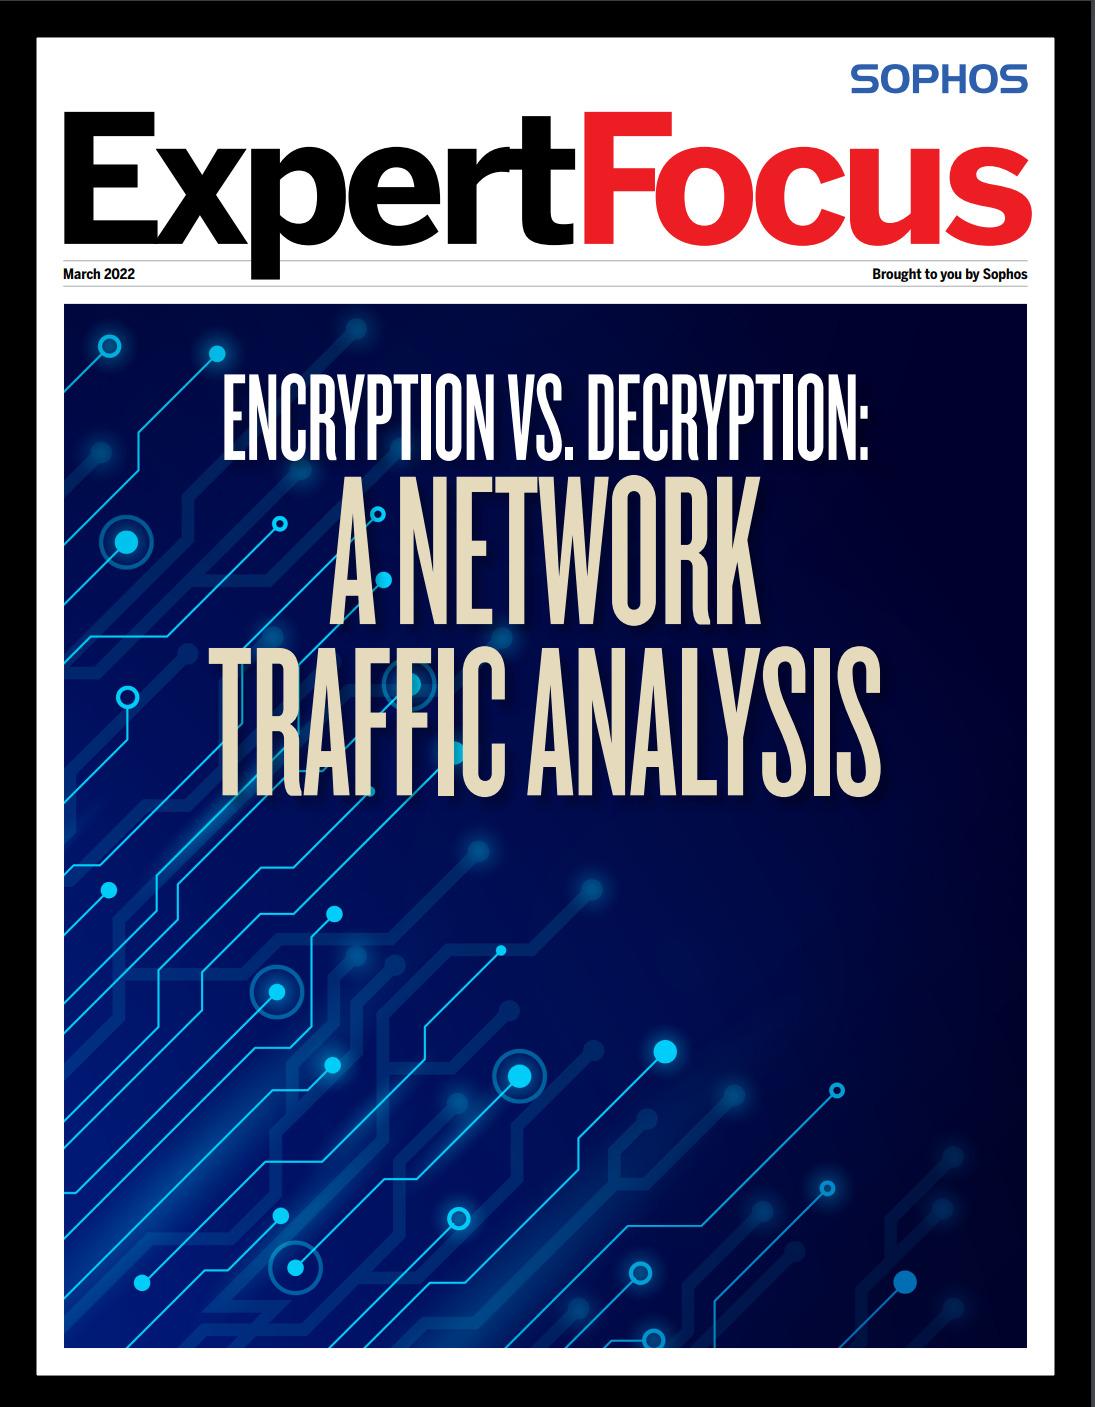 Encryption vs.decryption: A Network traffic analysis analysis